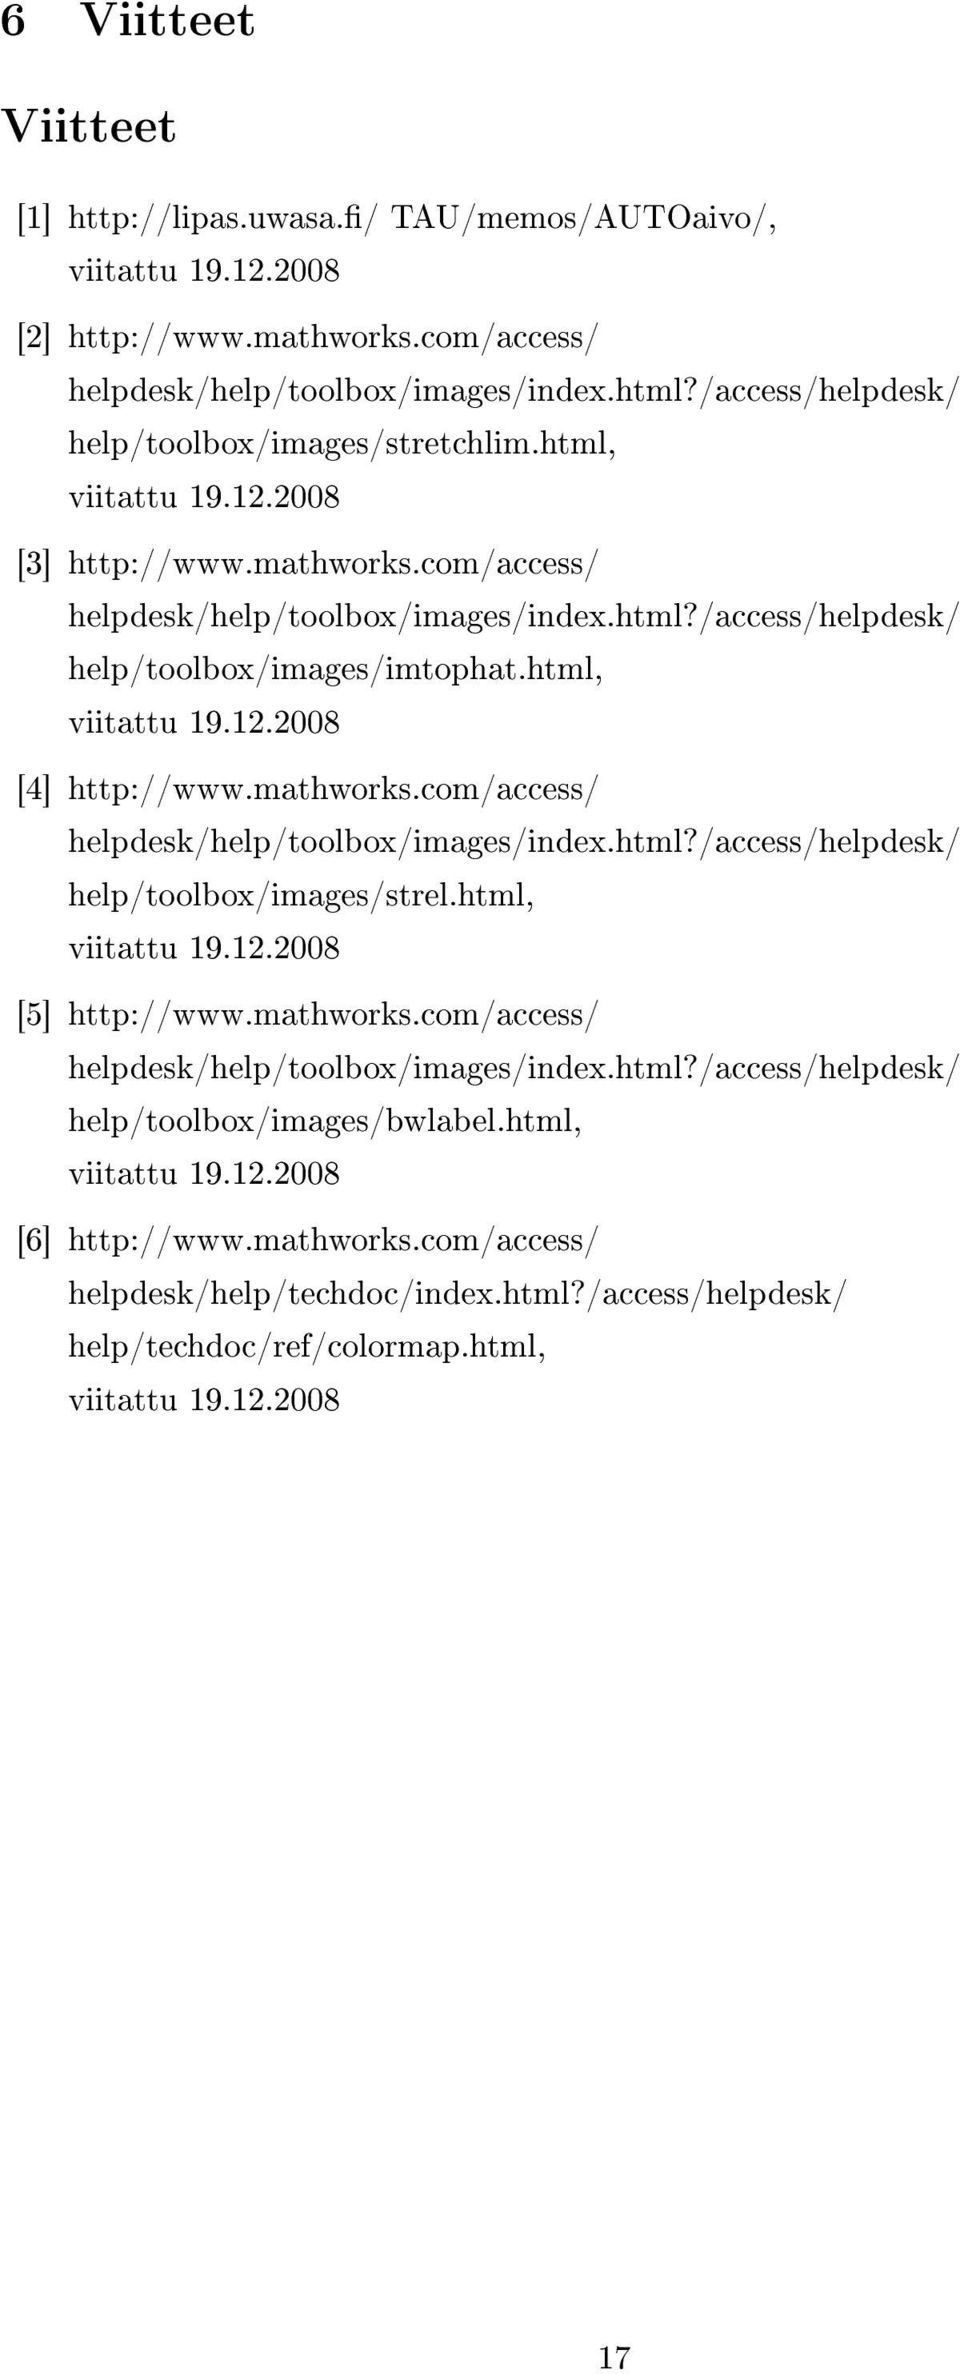 html, viitattu 19.12.2008 [4] http://www.mathworks.com/access/ helpdesk/help/toolbox/images/index.html?/access/helpdesk/ help/toolbox/images/strel.html, viitattu 19.12.2008 [5] http://www.mathworks.com/access/ helpdesk/help/toolbox/images/index.html?/access/helpdesk/ help/toolbox/images/bwlabel.